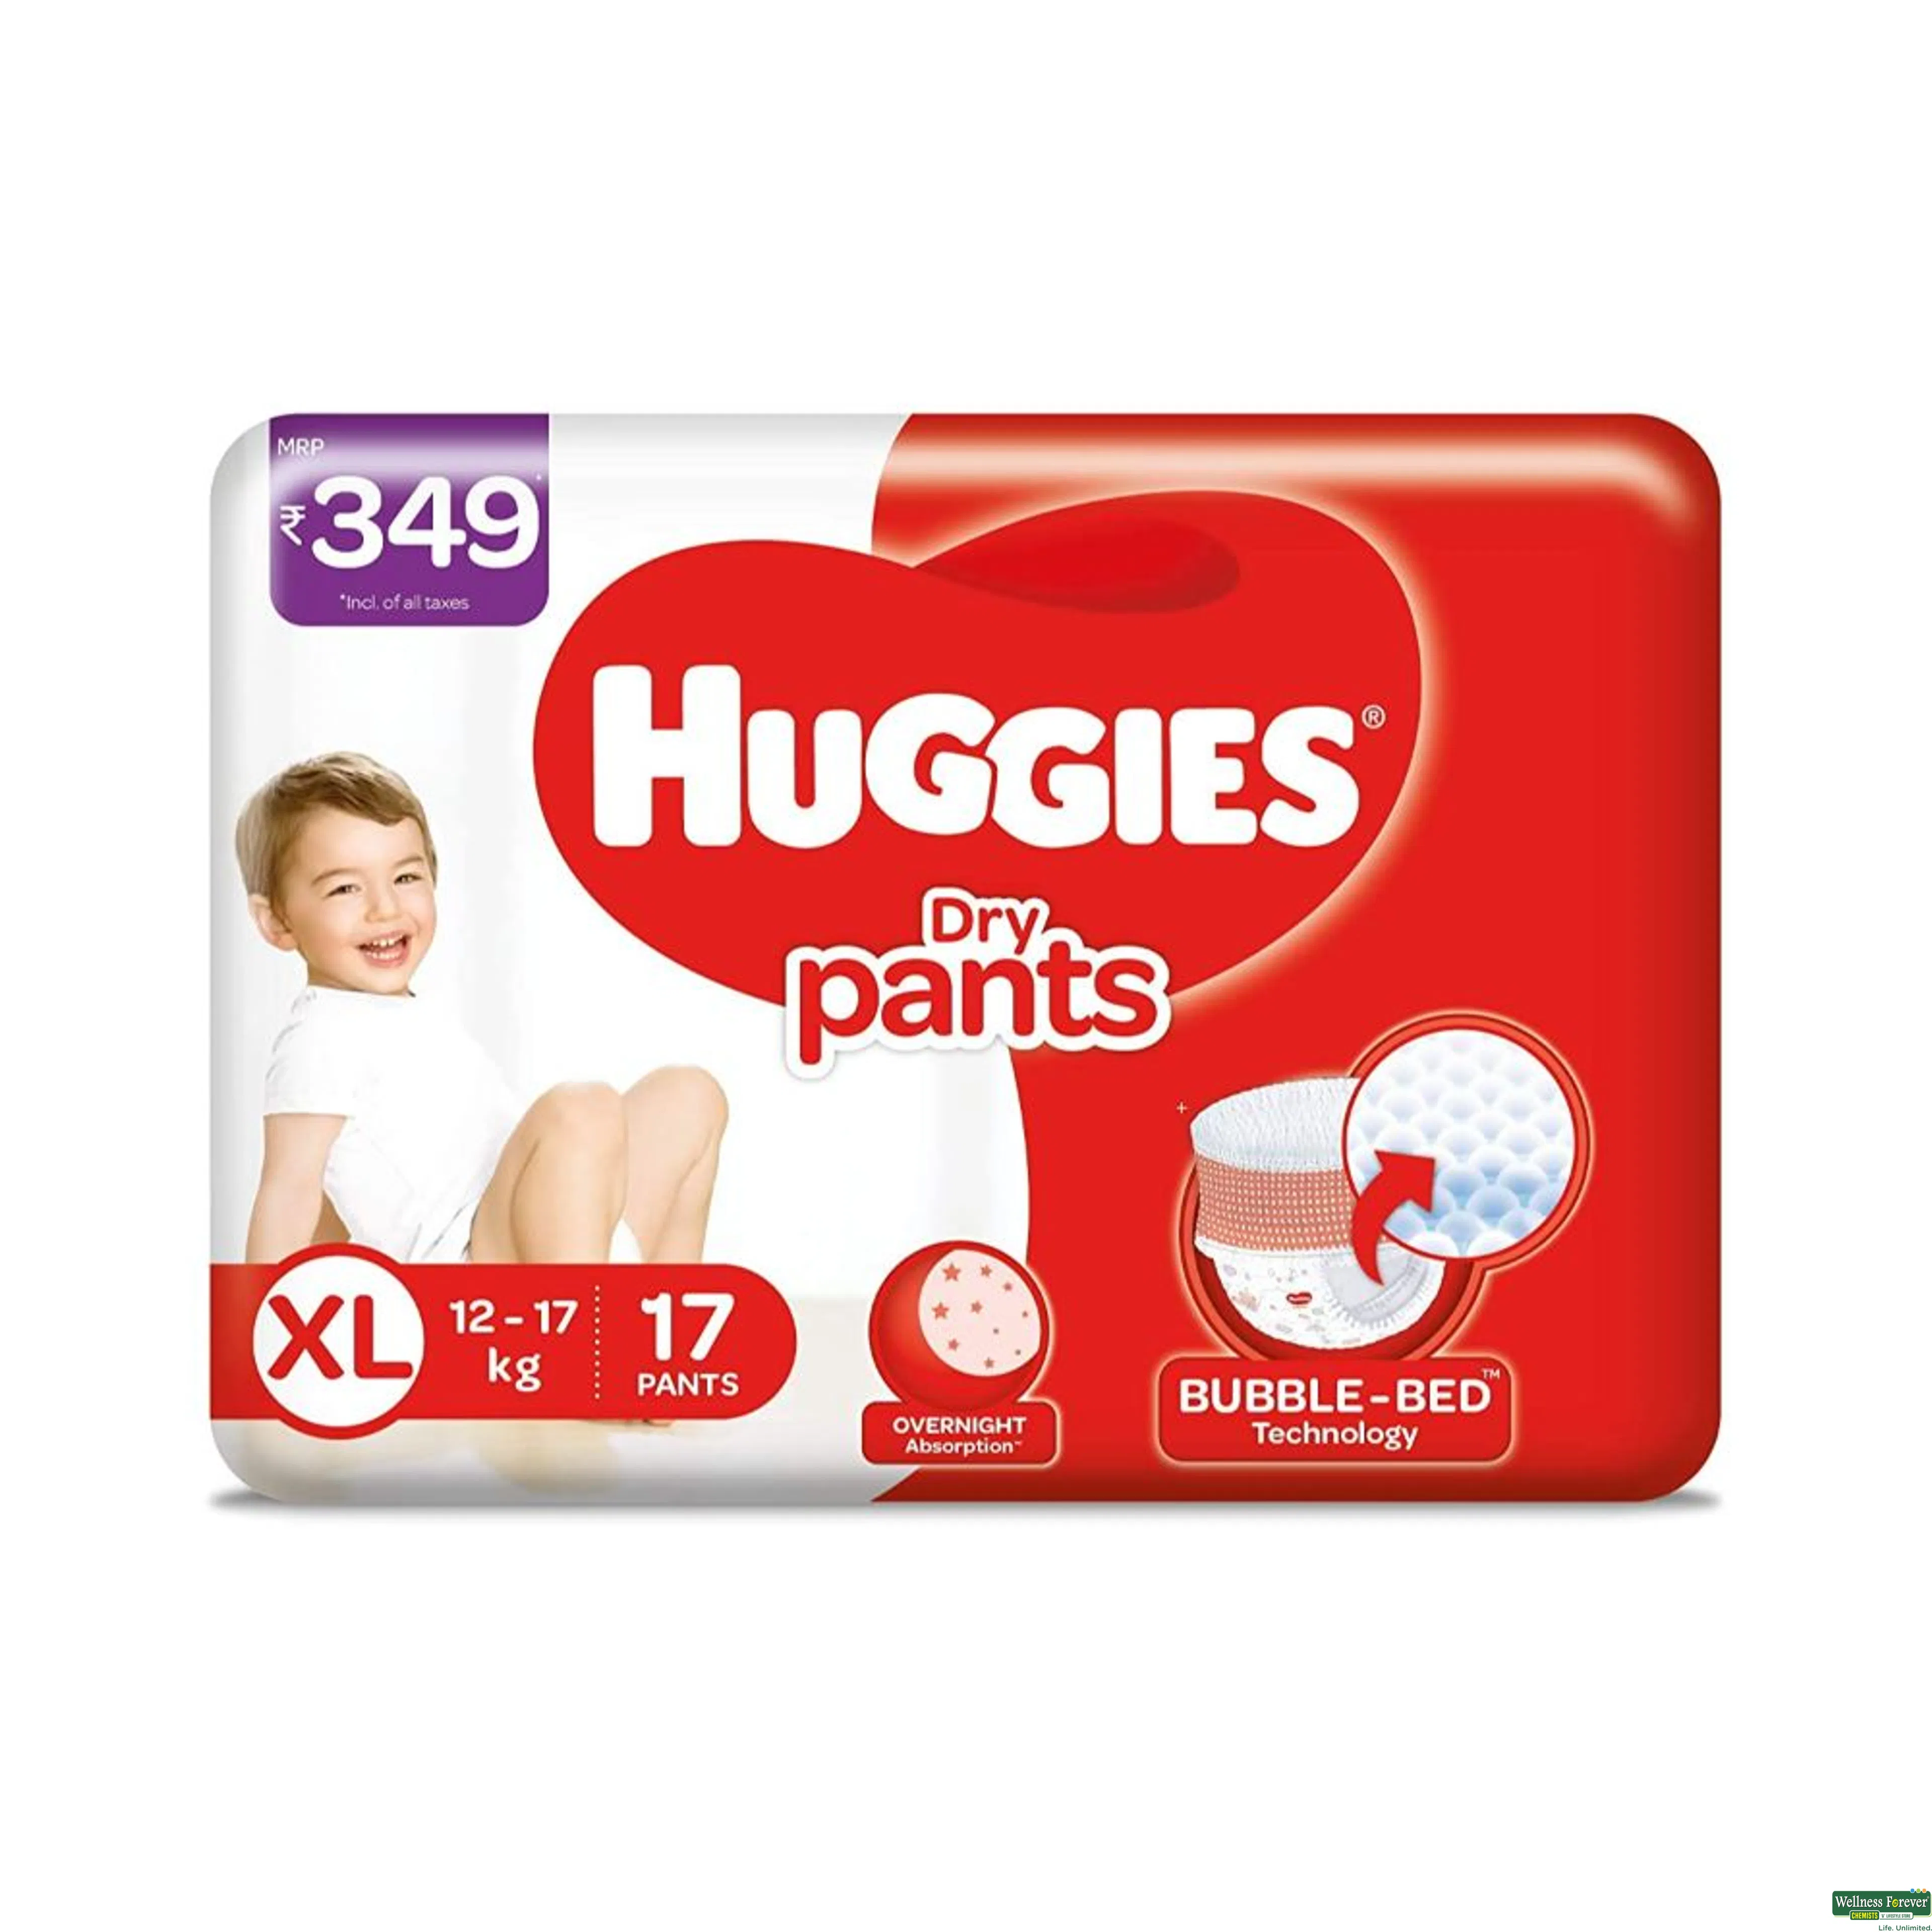 30% OFF on Huggies Wonder Pants Extra Small Size Diaper Pants on Amazon |  PaisaWapas.com